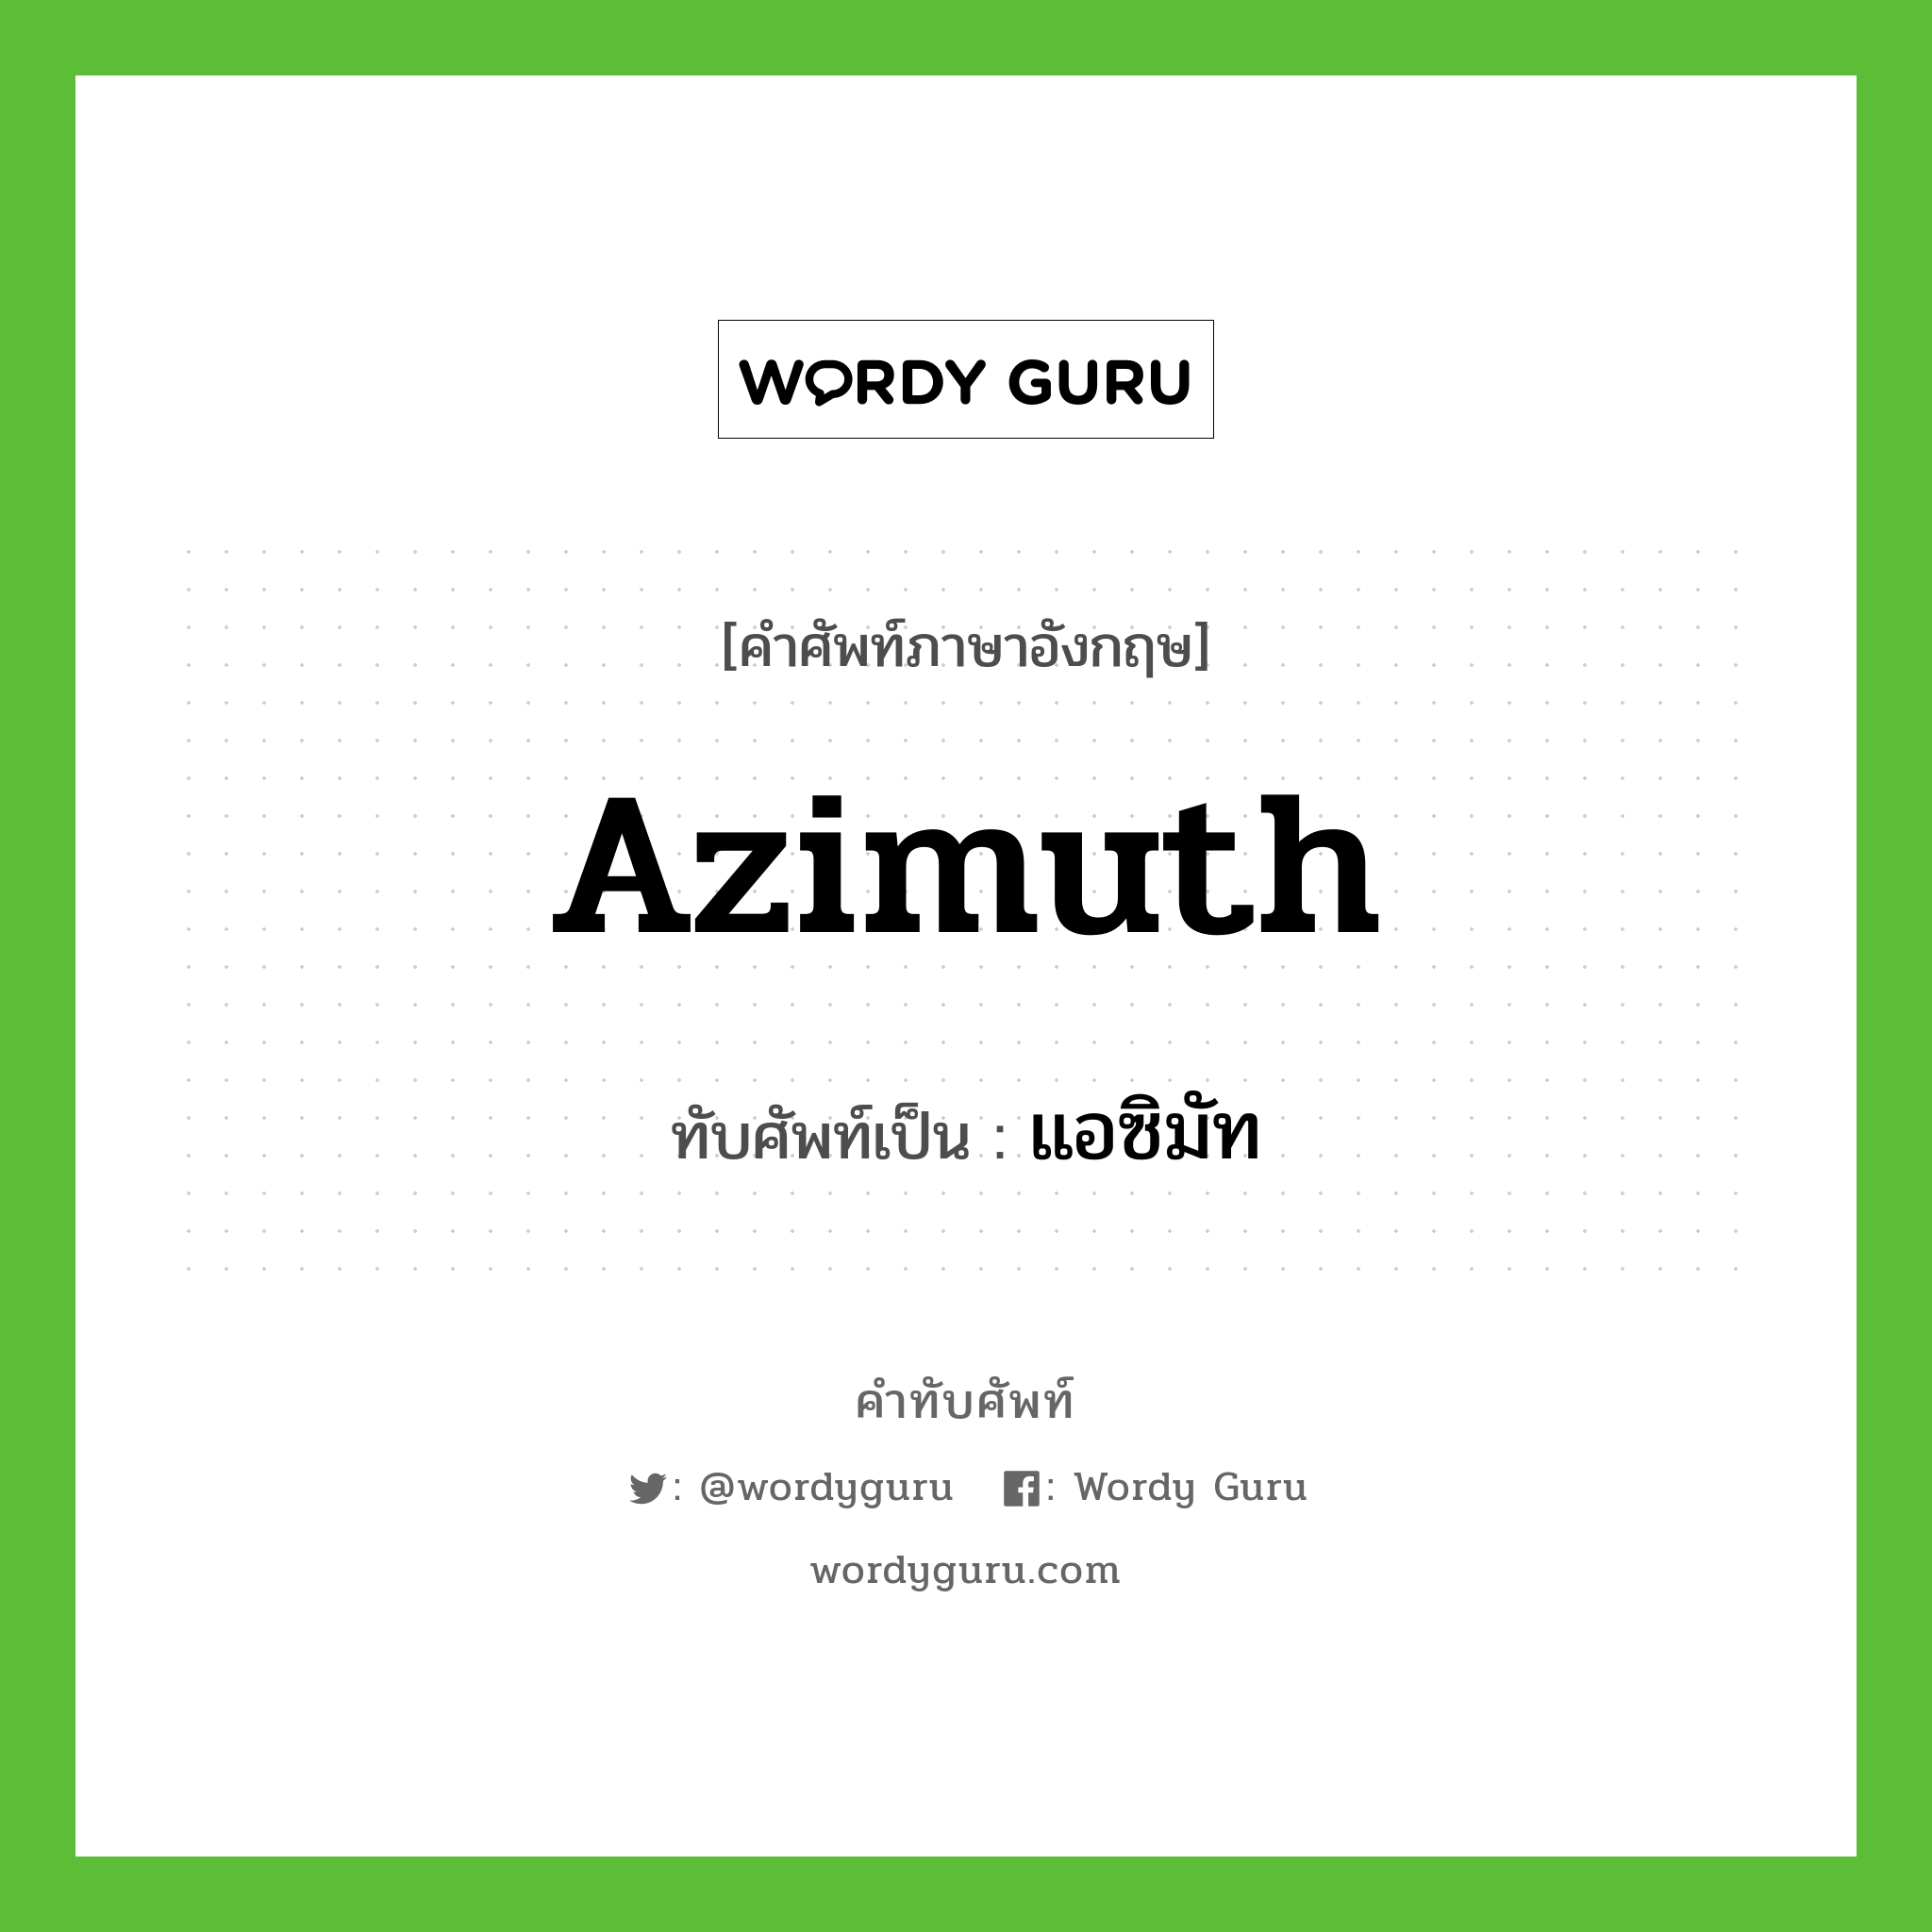 azimuth เขียนเป็นคำไทยว่าอะไร?, คำศัพท์ภาษาอังกฤษ azimuth ทับศัพท์เป็น แอซิมัท